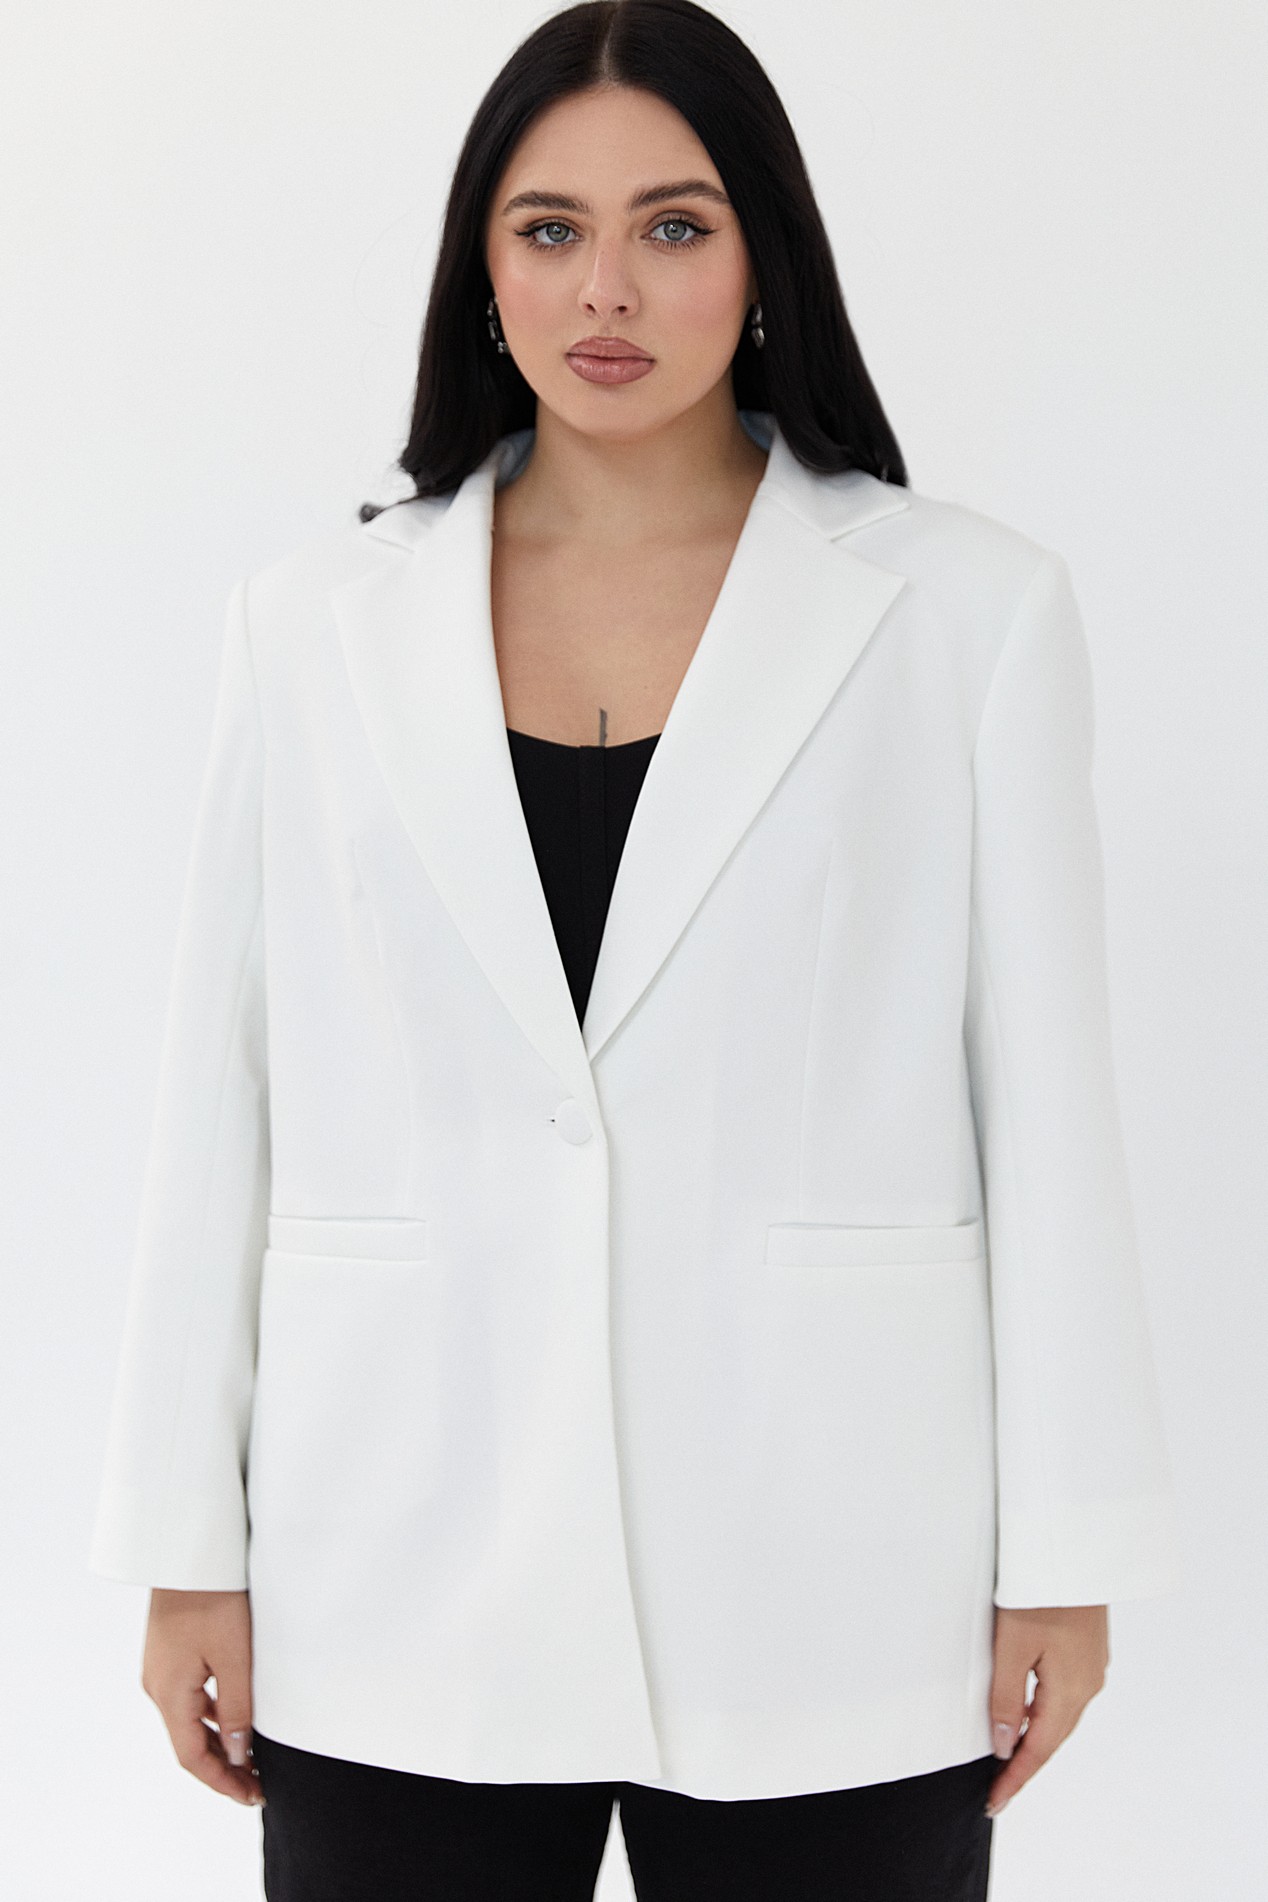 Buy Women's plus size suit - VOVK women's clothing online store